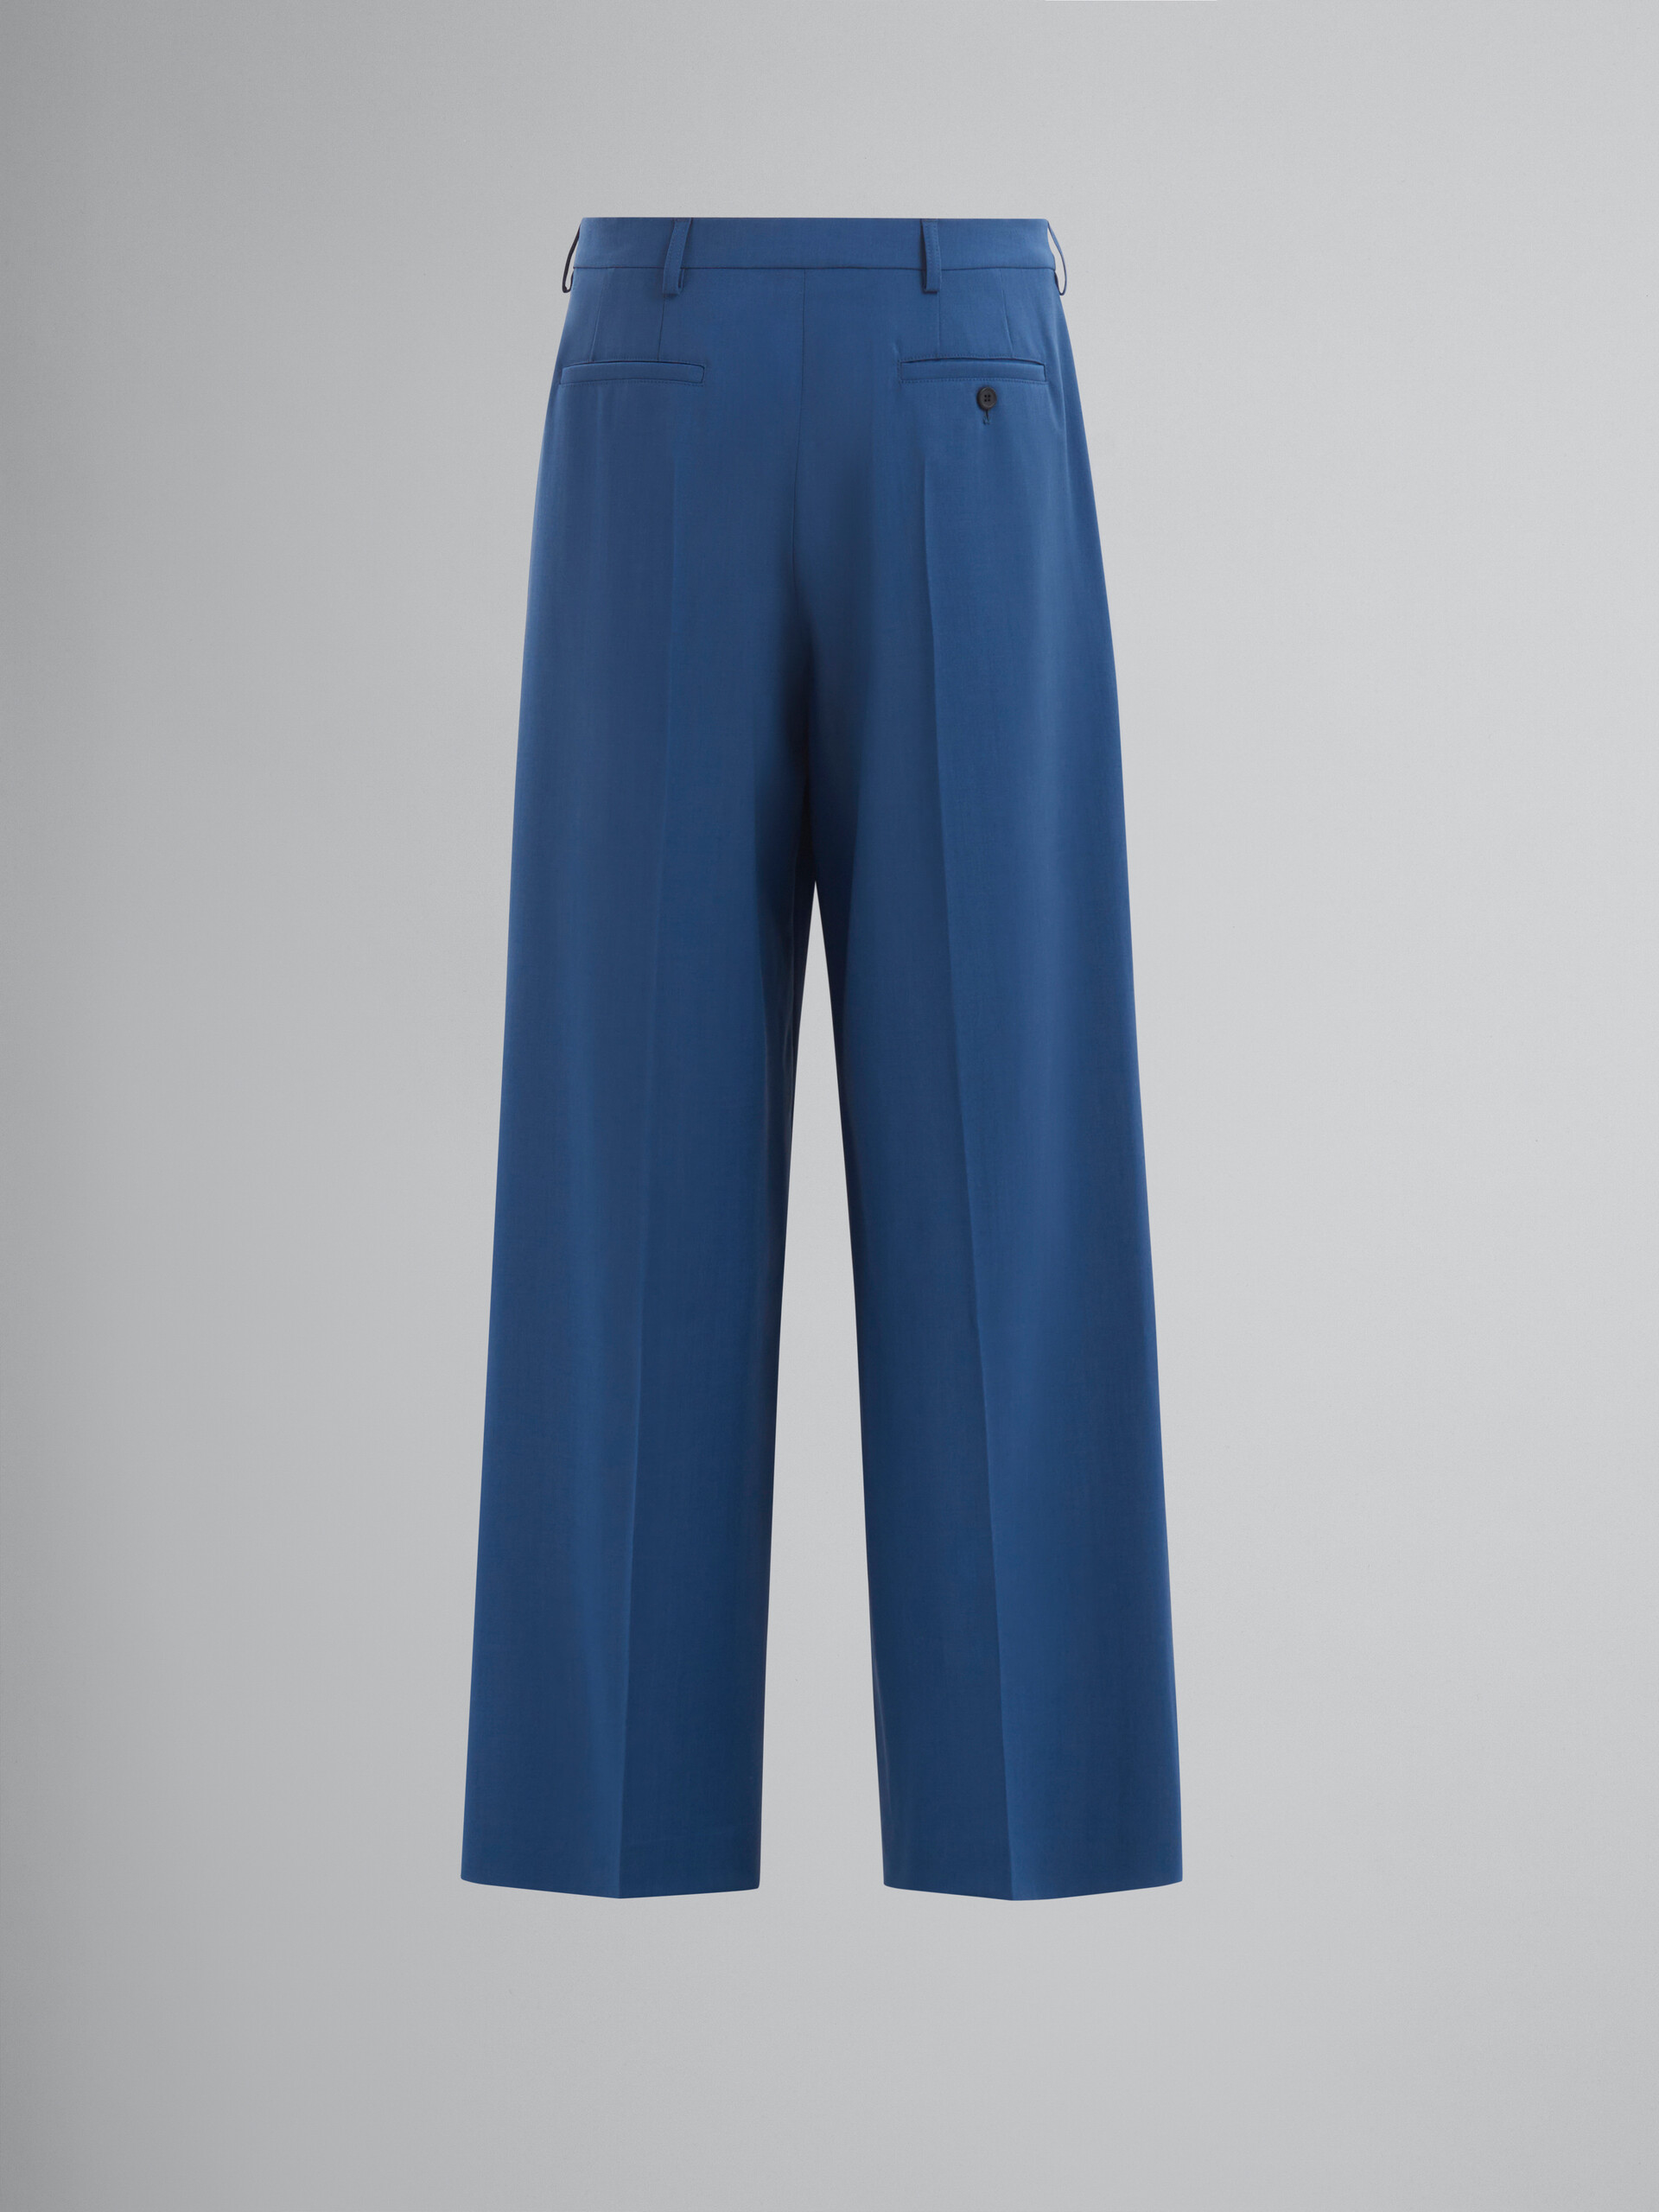 Pantaloni in lana mohair blu con pieghe - Pantaloni - Image 2